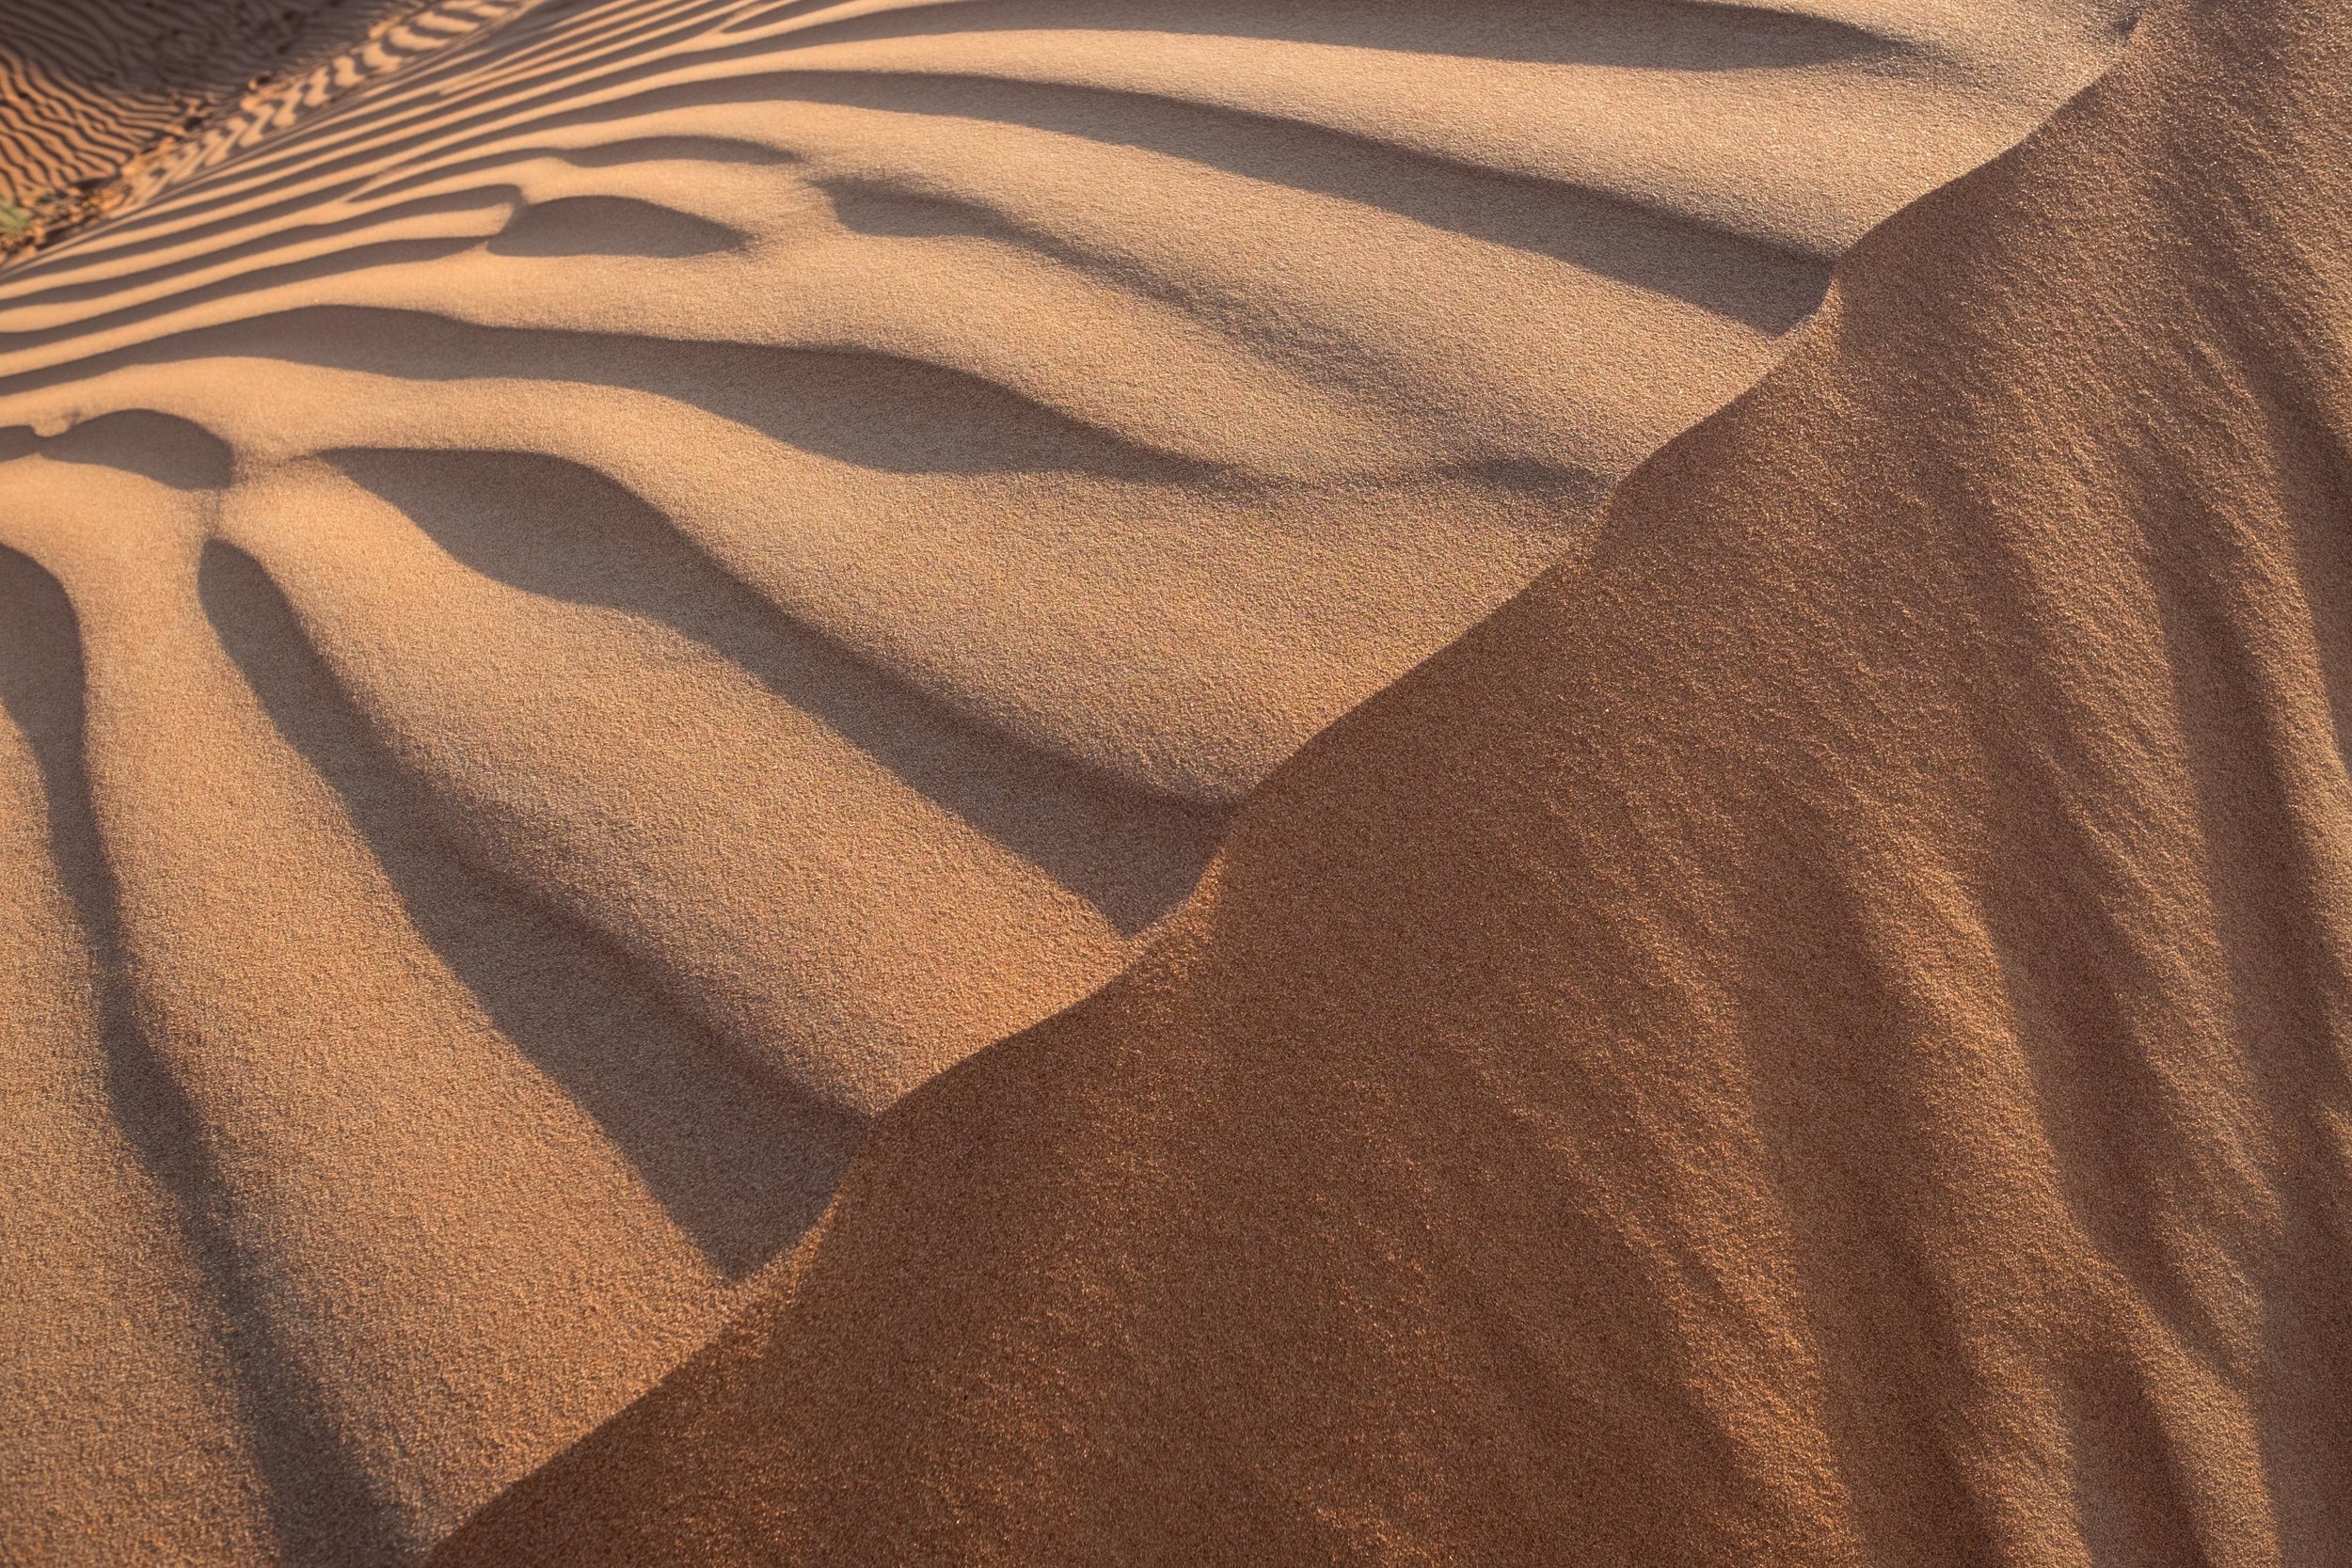 Patterns in the desert